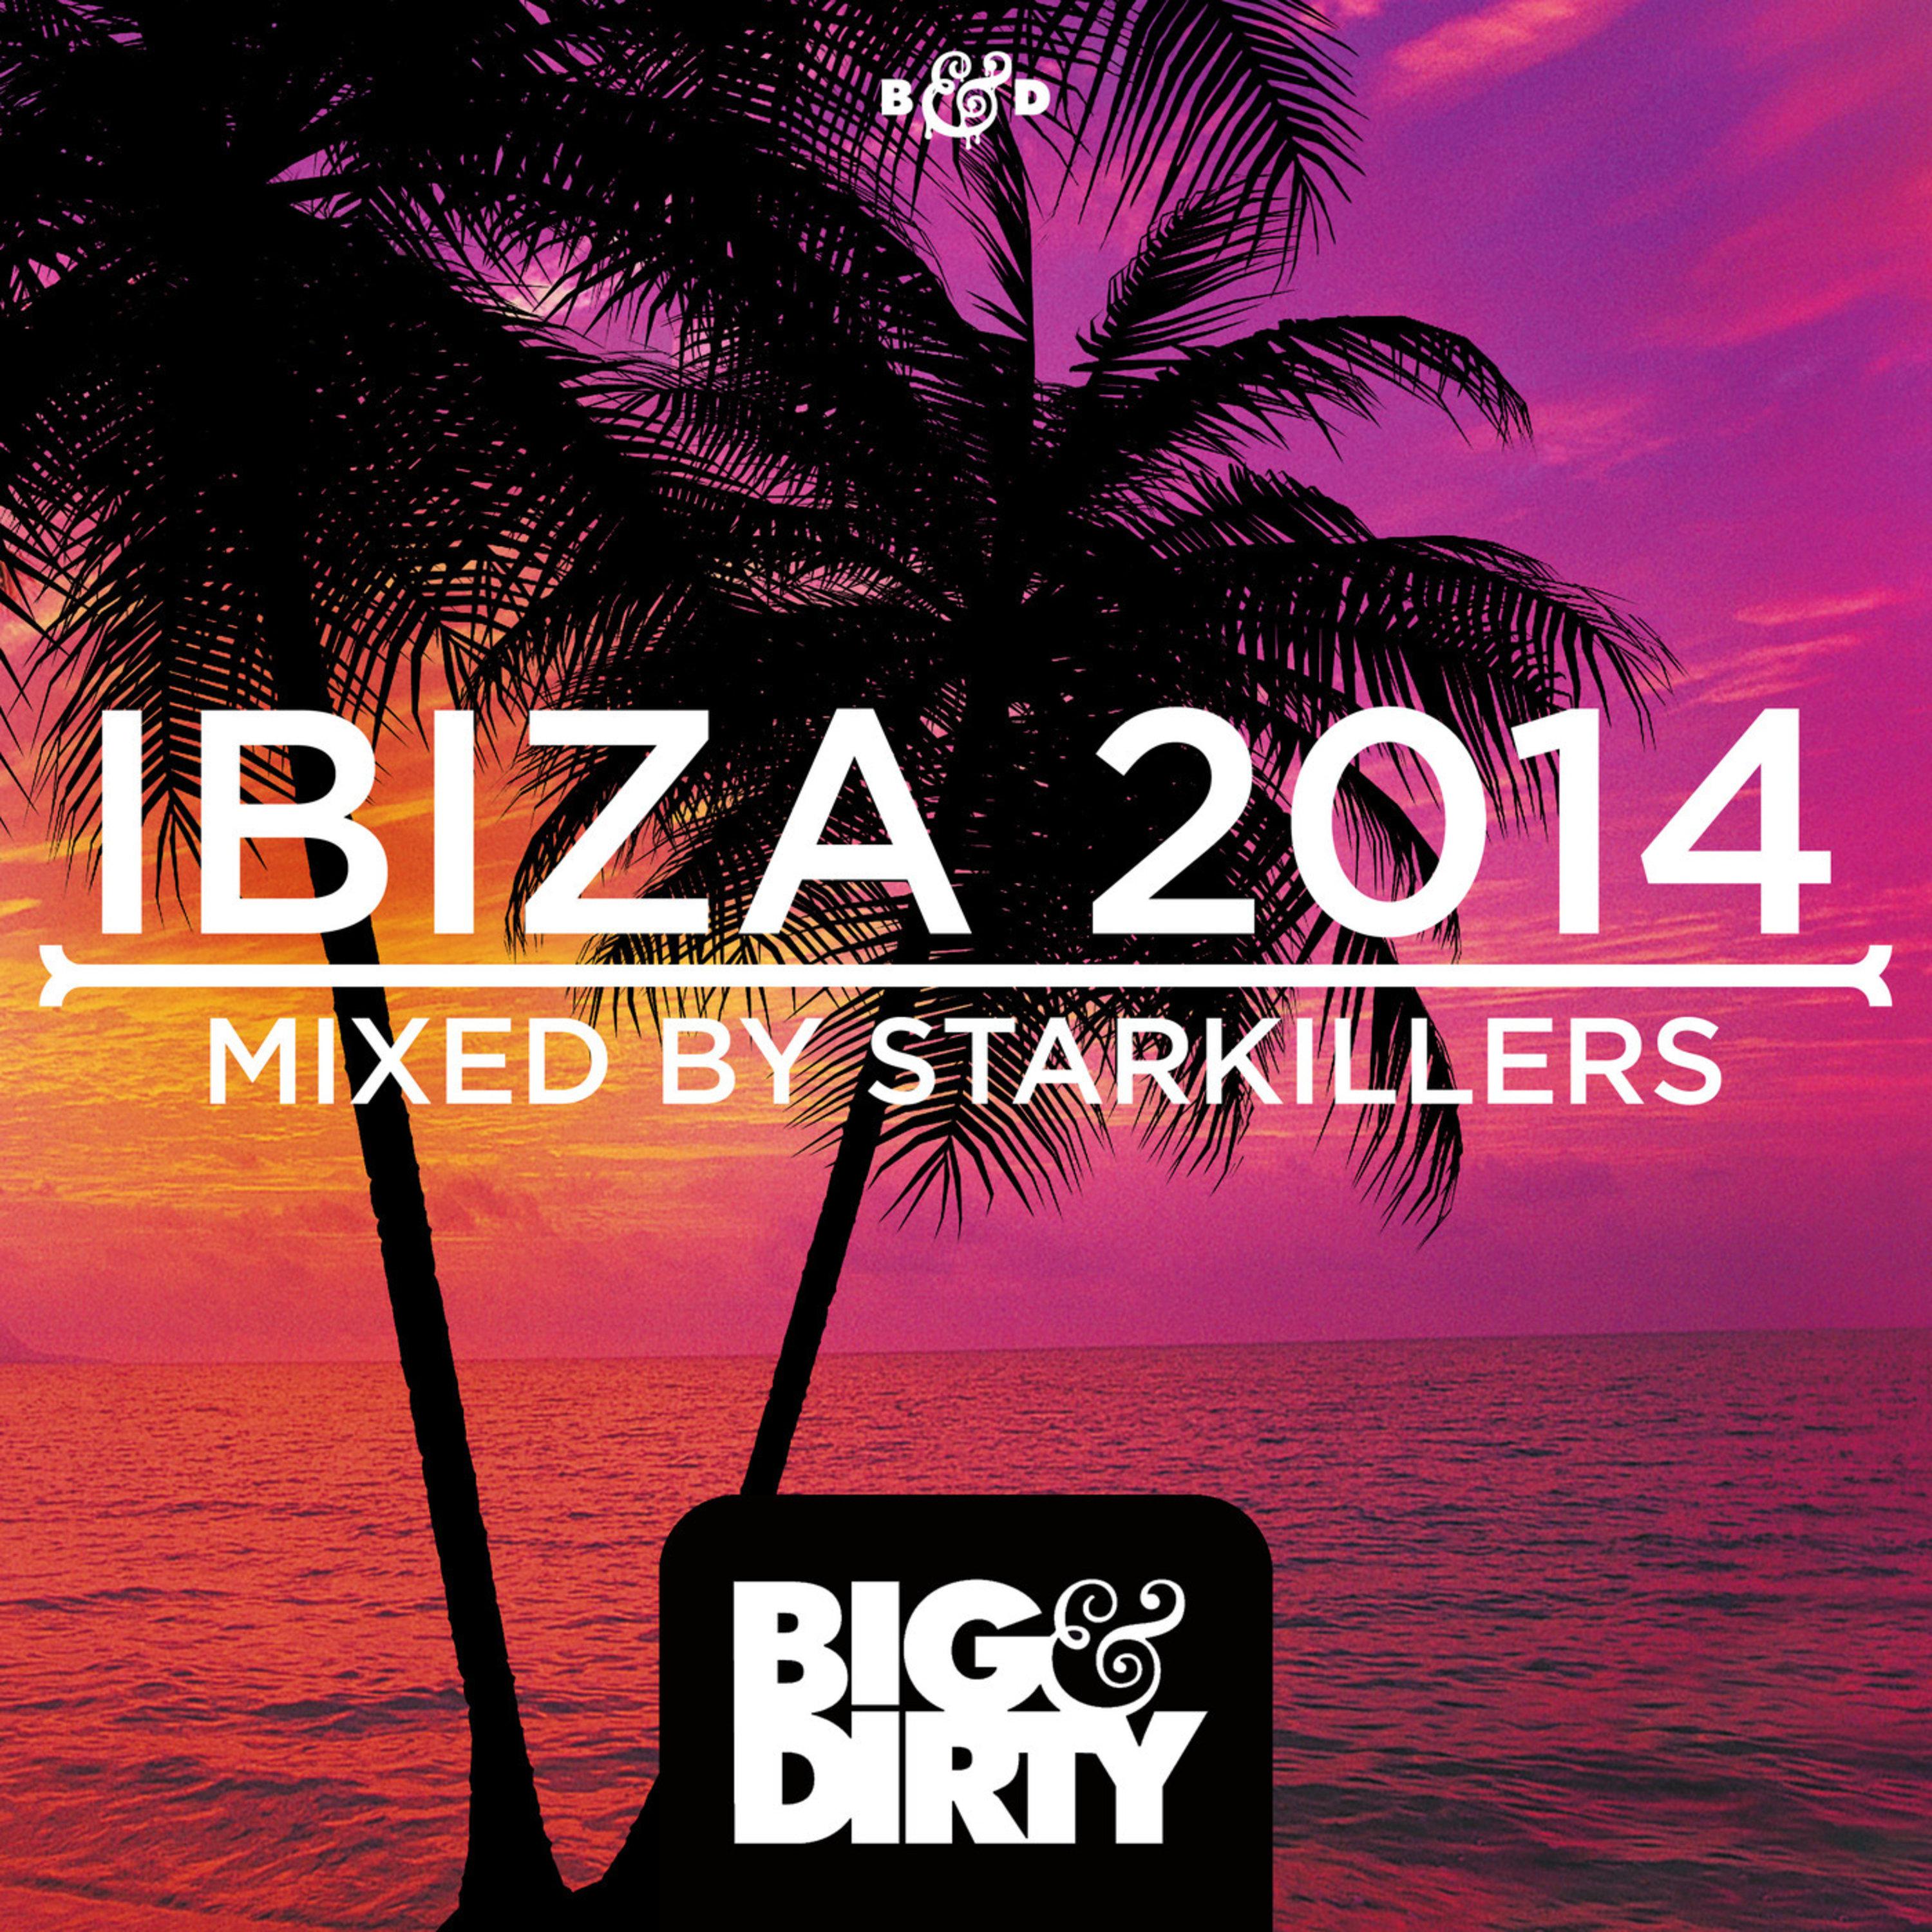 Big & Dirty Ibiza 2014